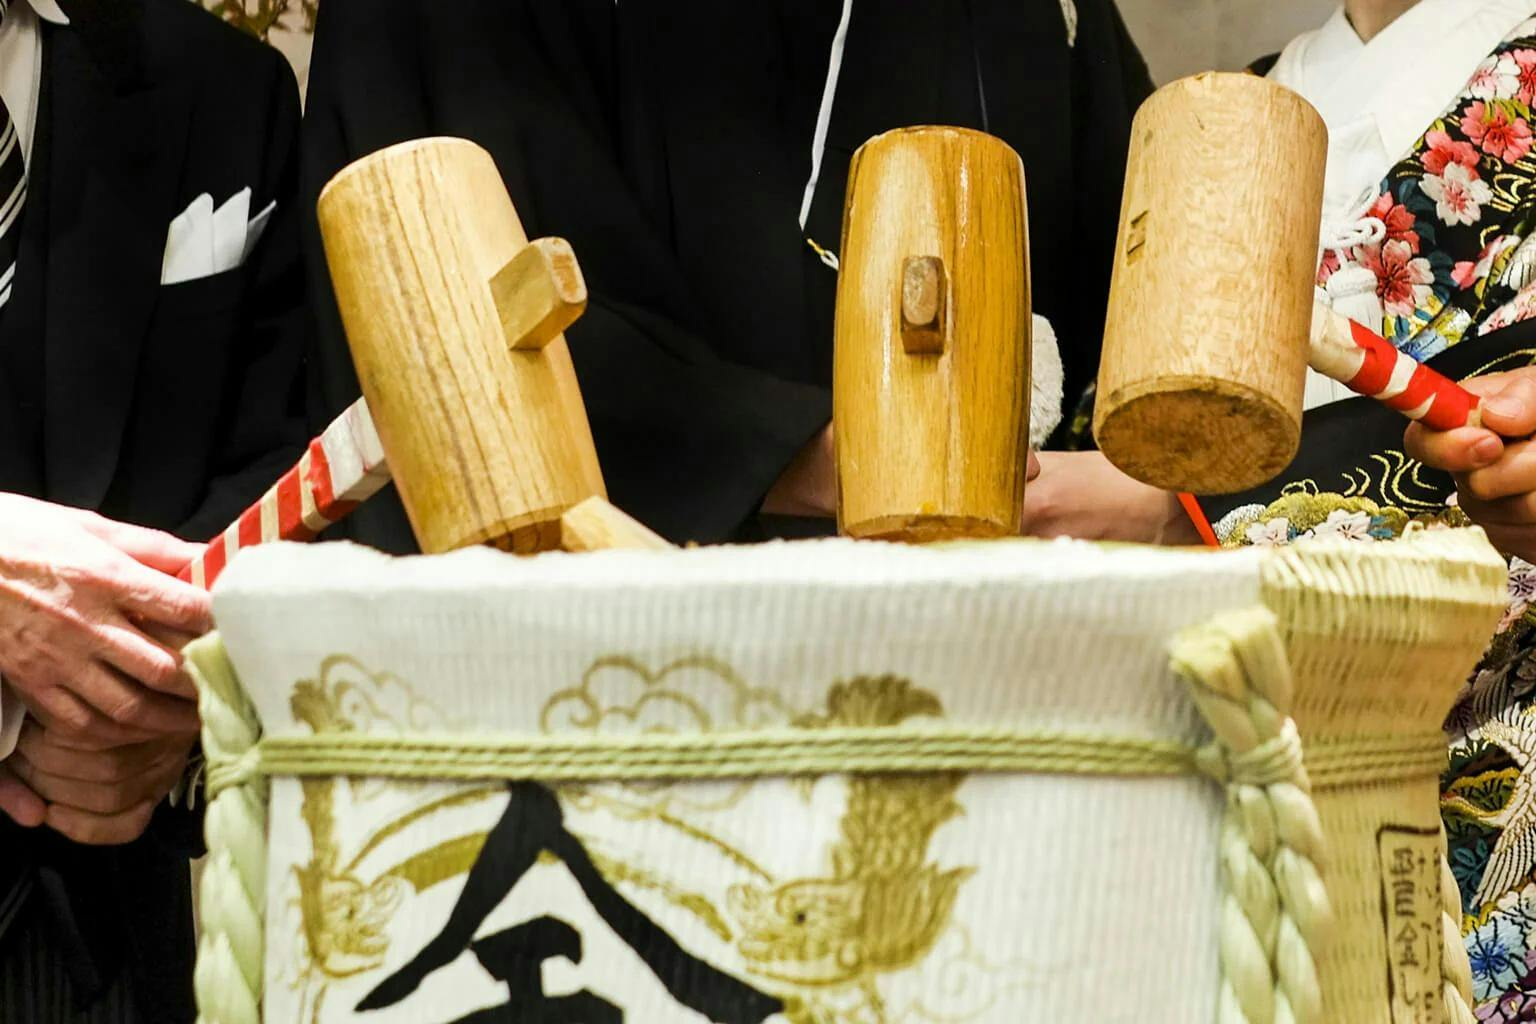 Wooden mallets are set to strike a sake cask at a wedding as part of kagami biraki.